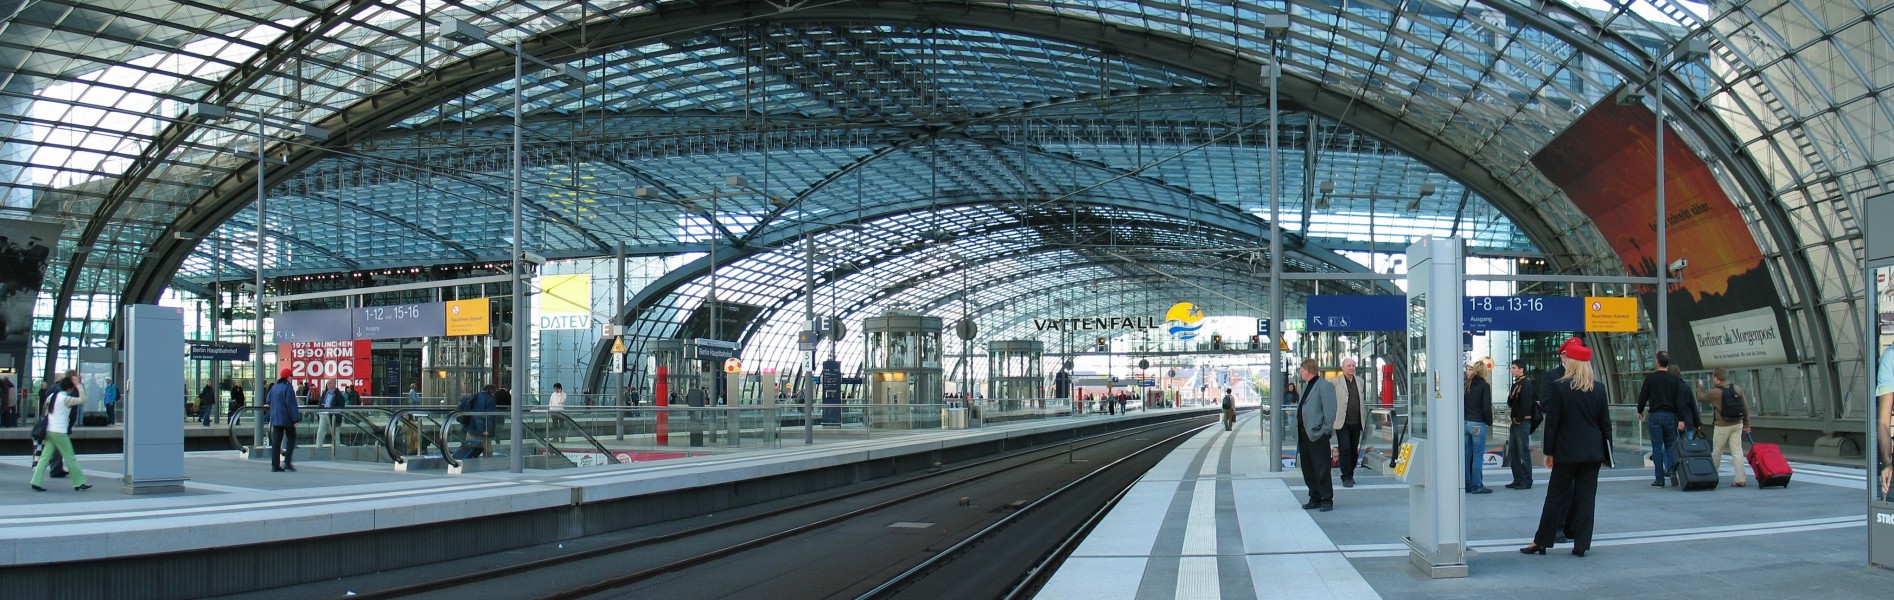 Berlin Hauptbahnhof pano 06